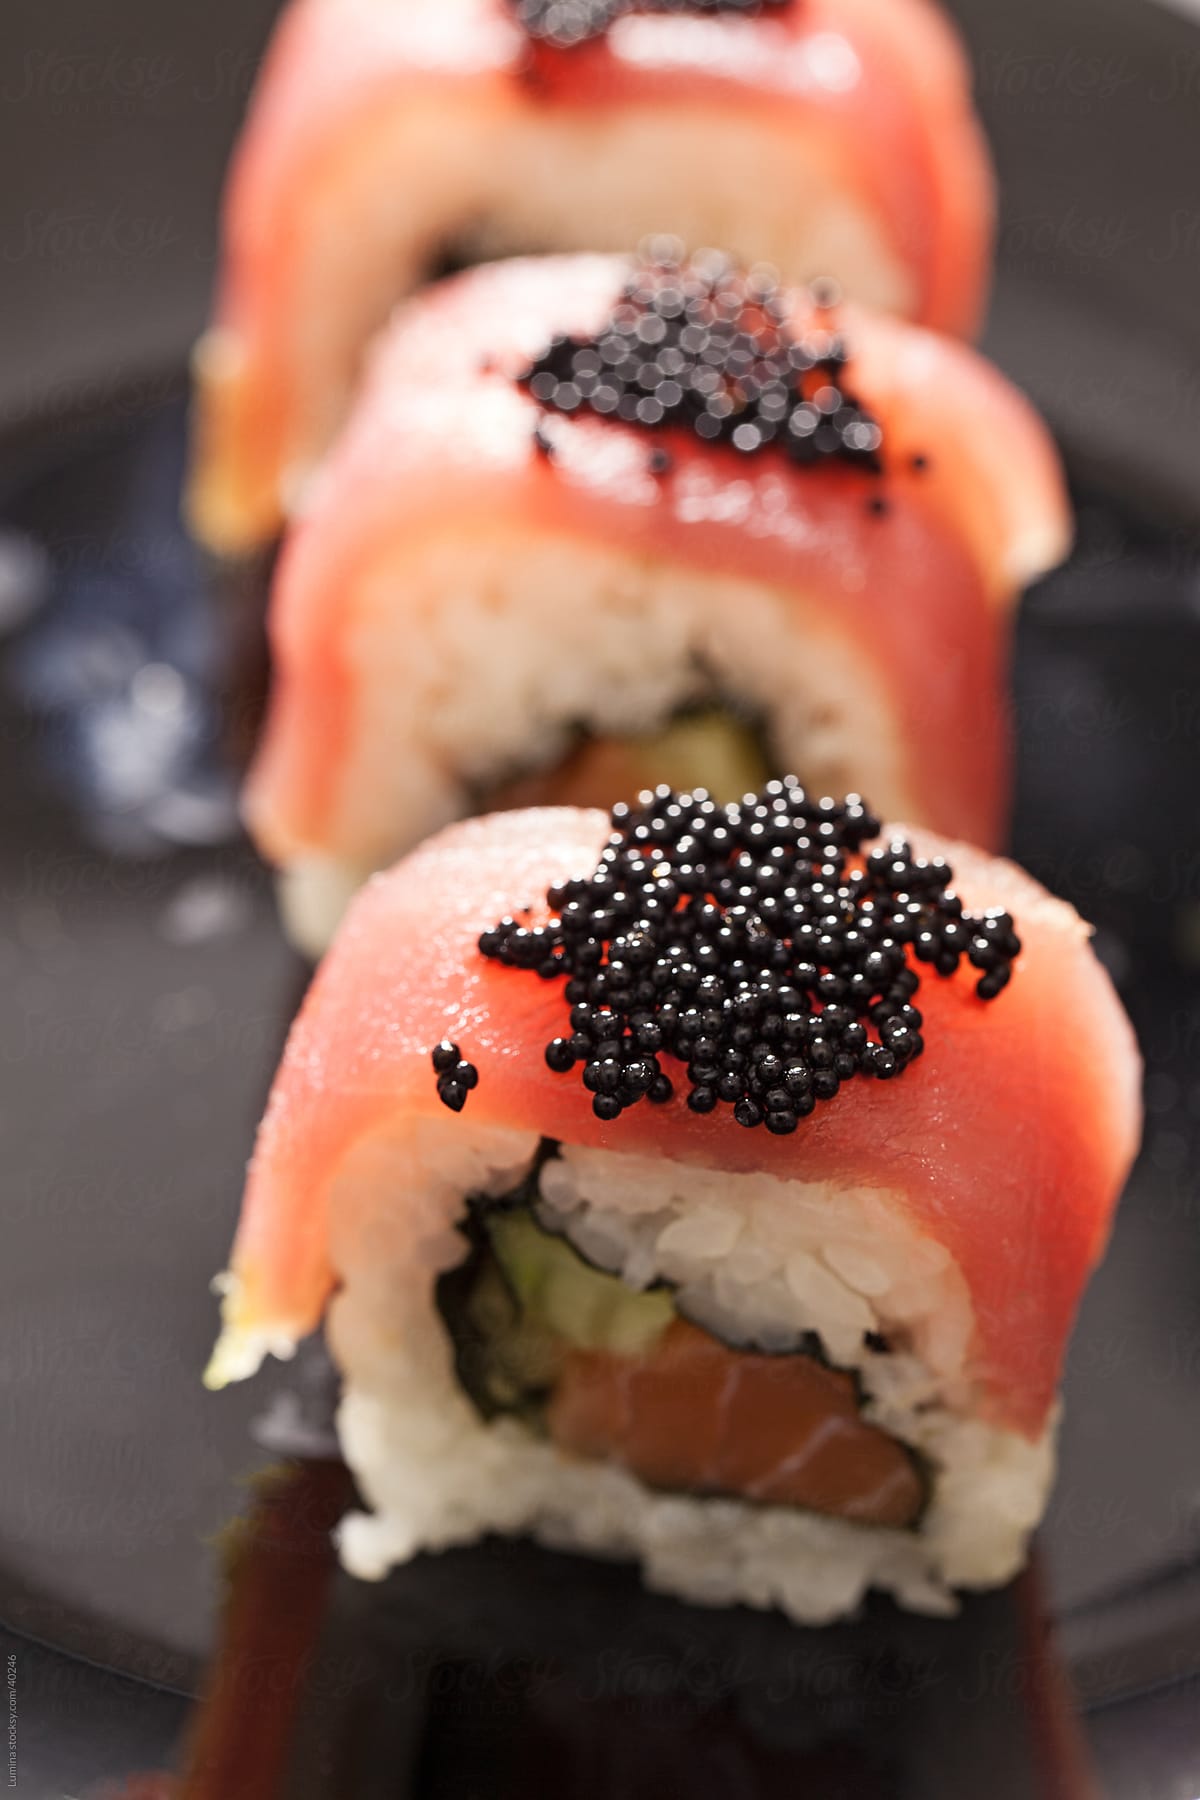 Tuna Sushi Rolls